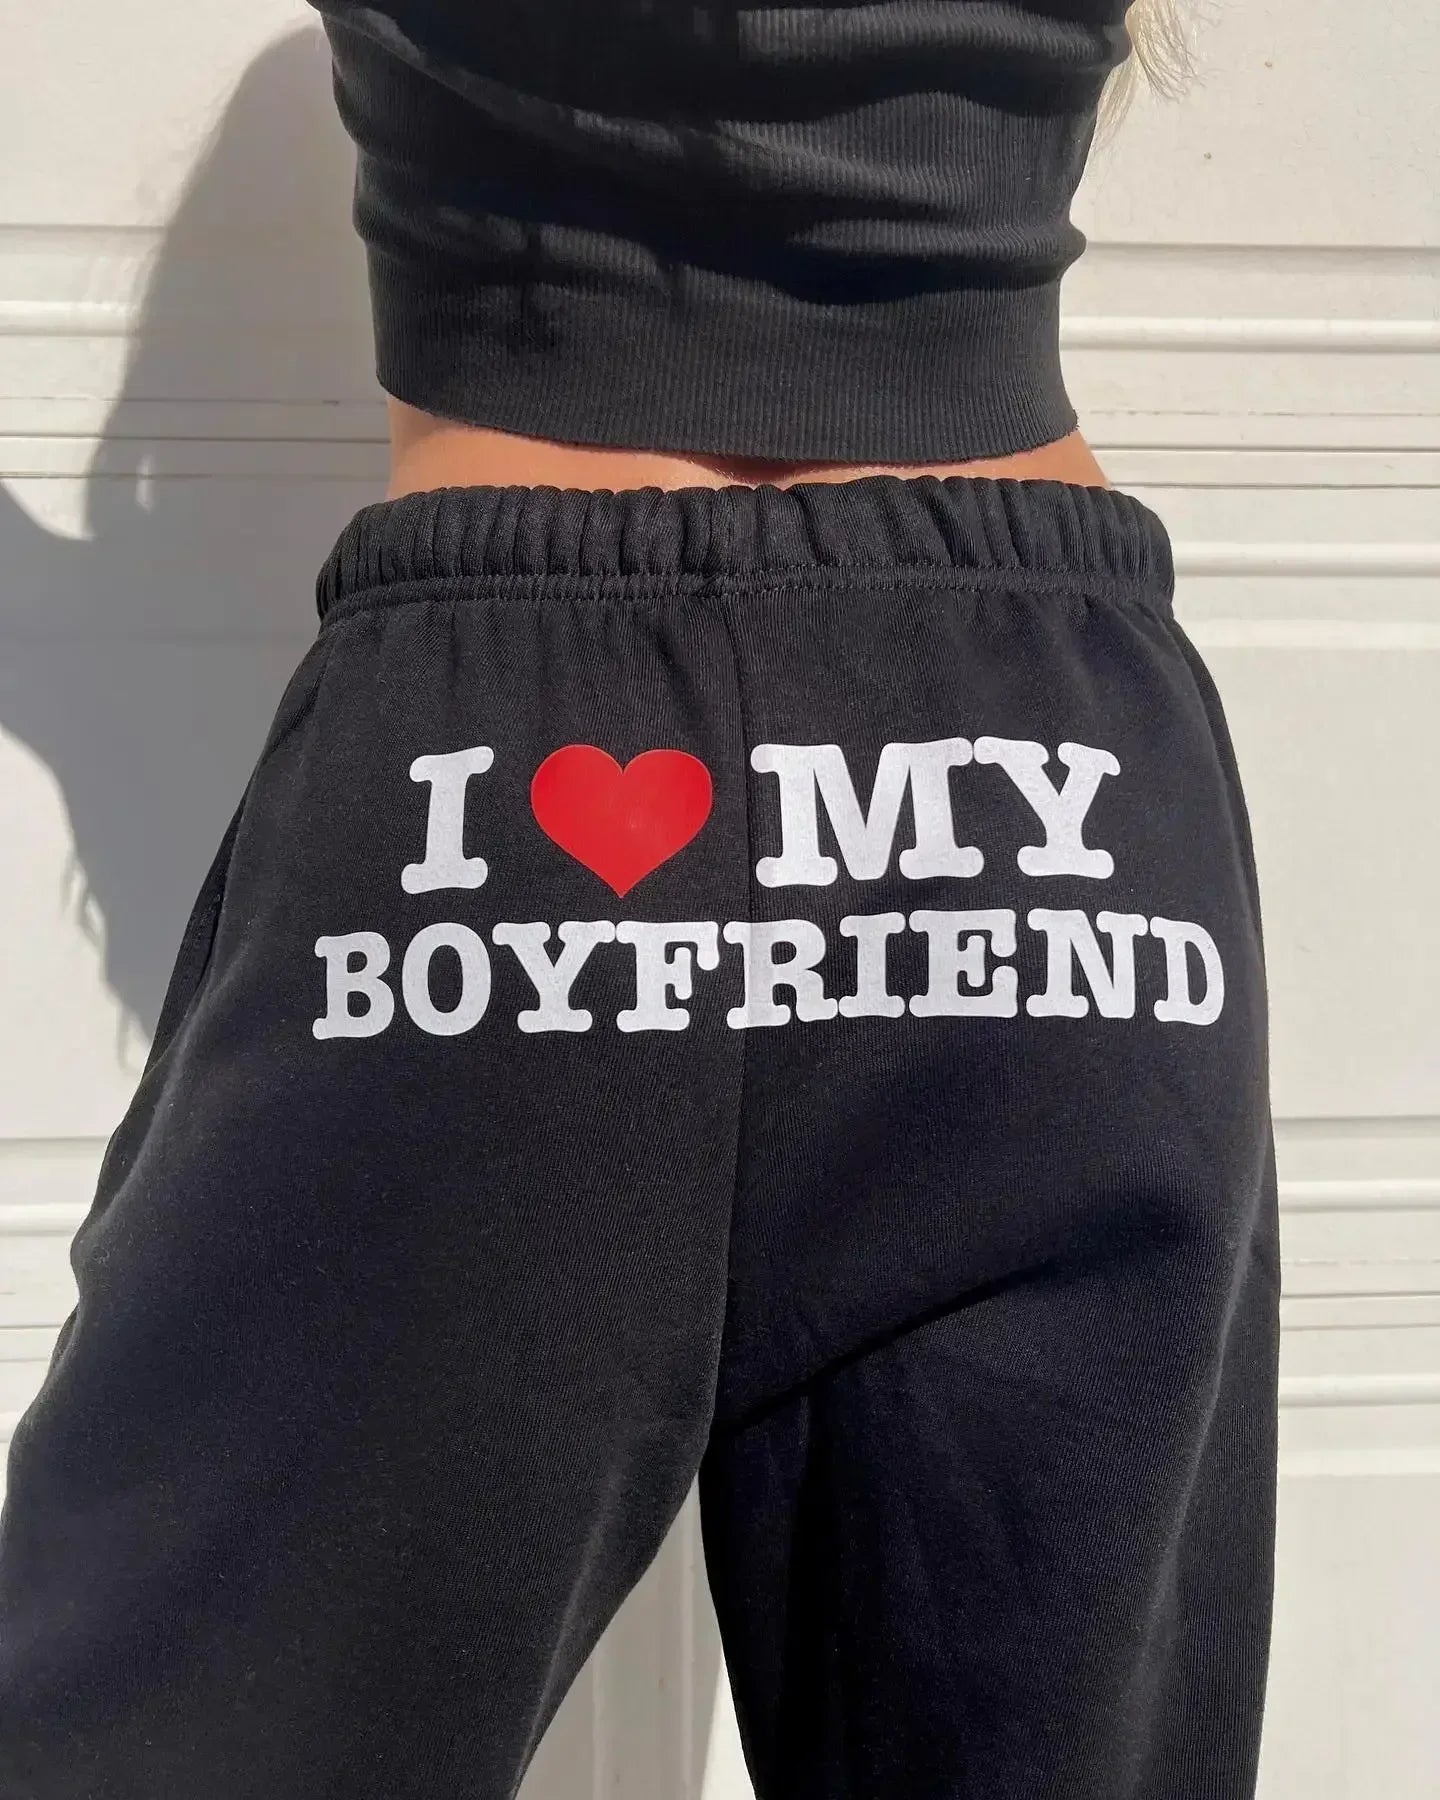 I Love My Boyfriend Sweatpants